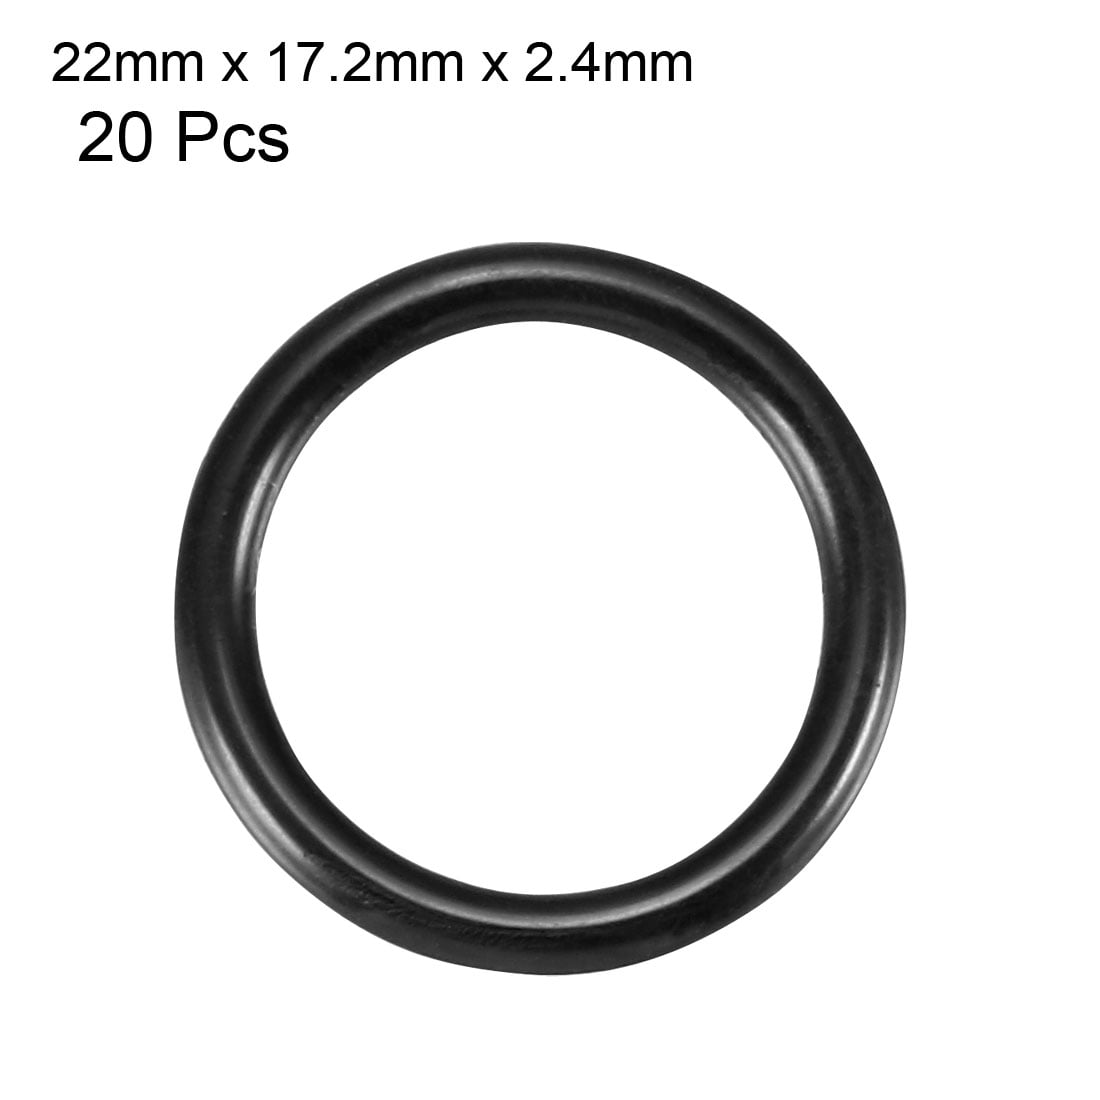 30 Pcs Black 22mm x 2.4mm Oil Resistant Sealing Ring O-shape NBR Rubber Grommet 